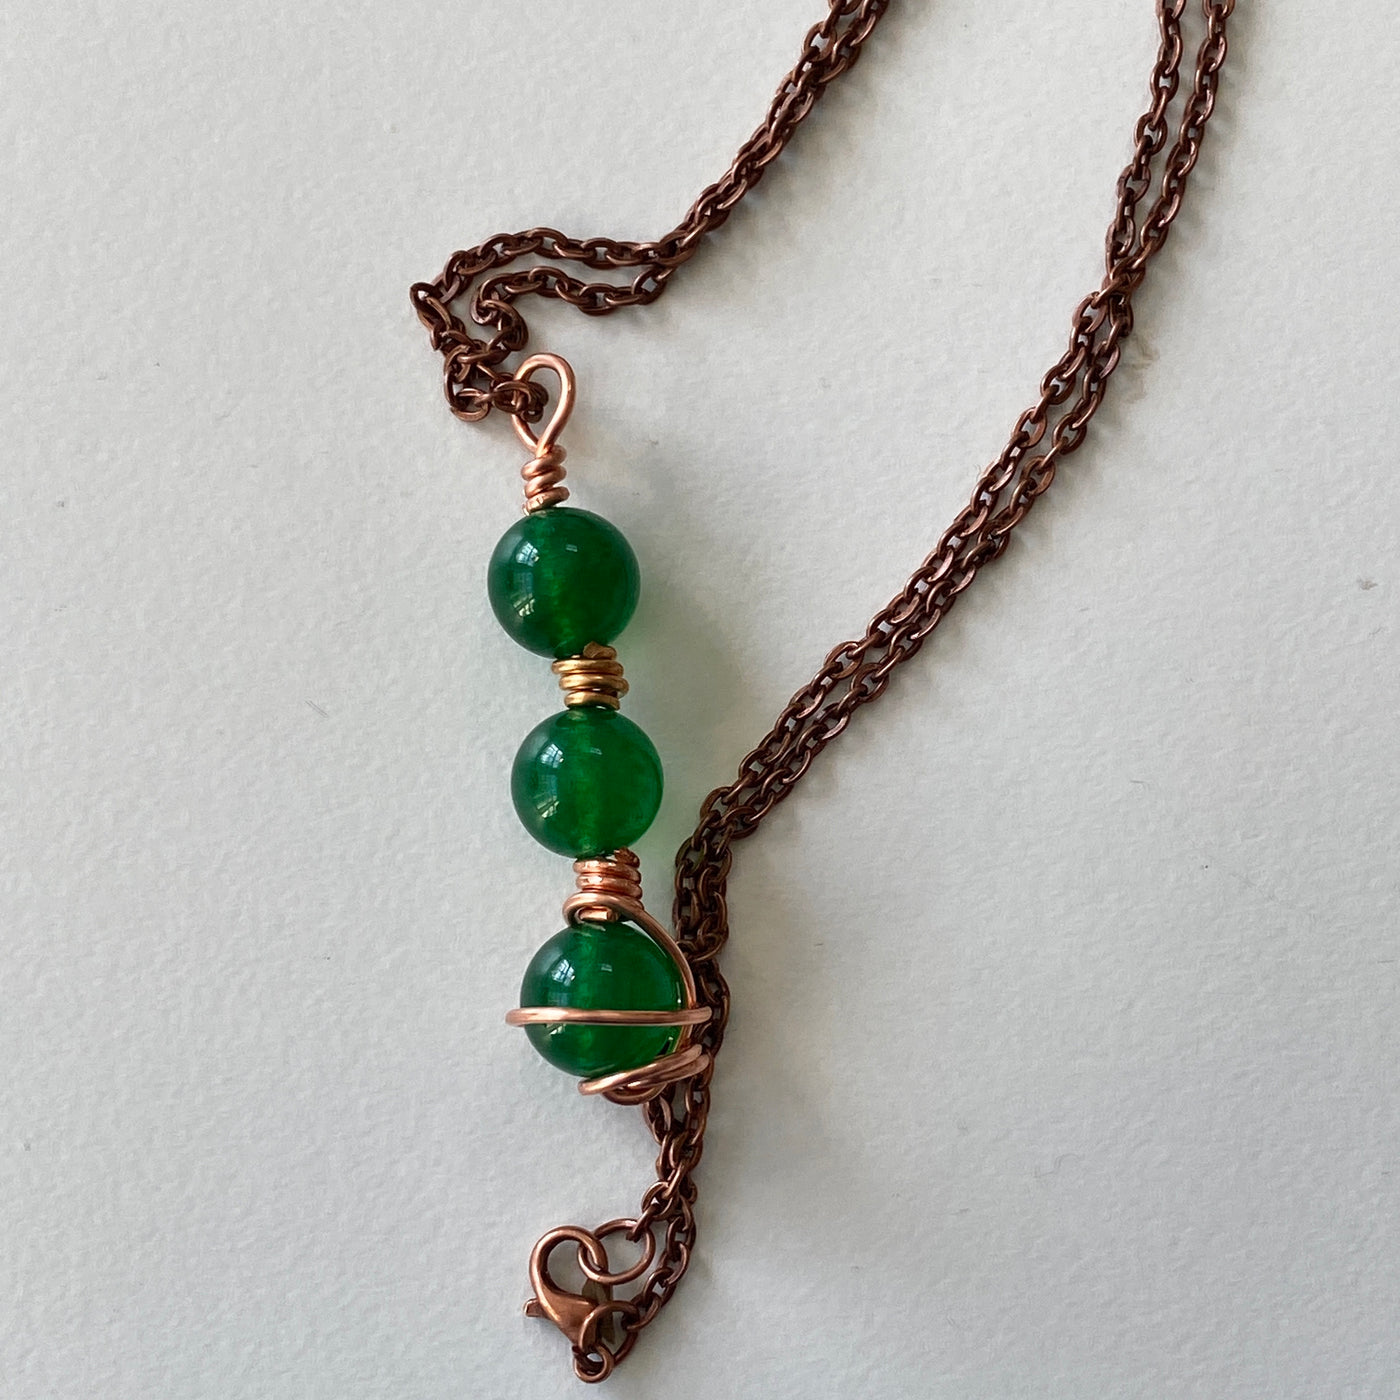 Green calcedony pendant on chain